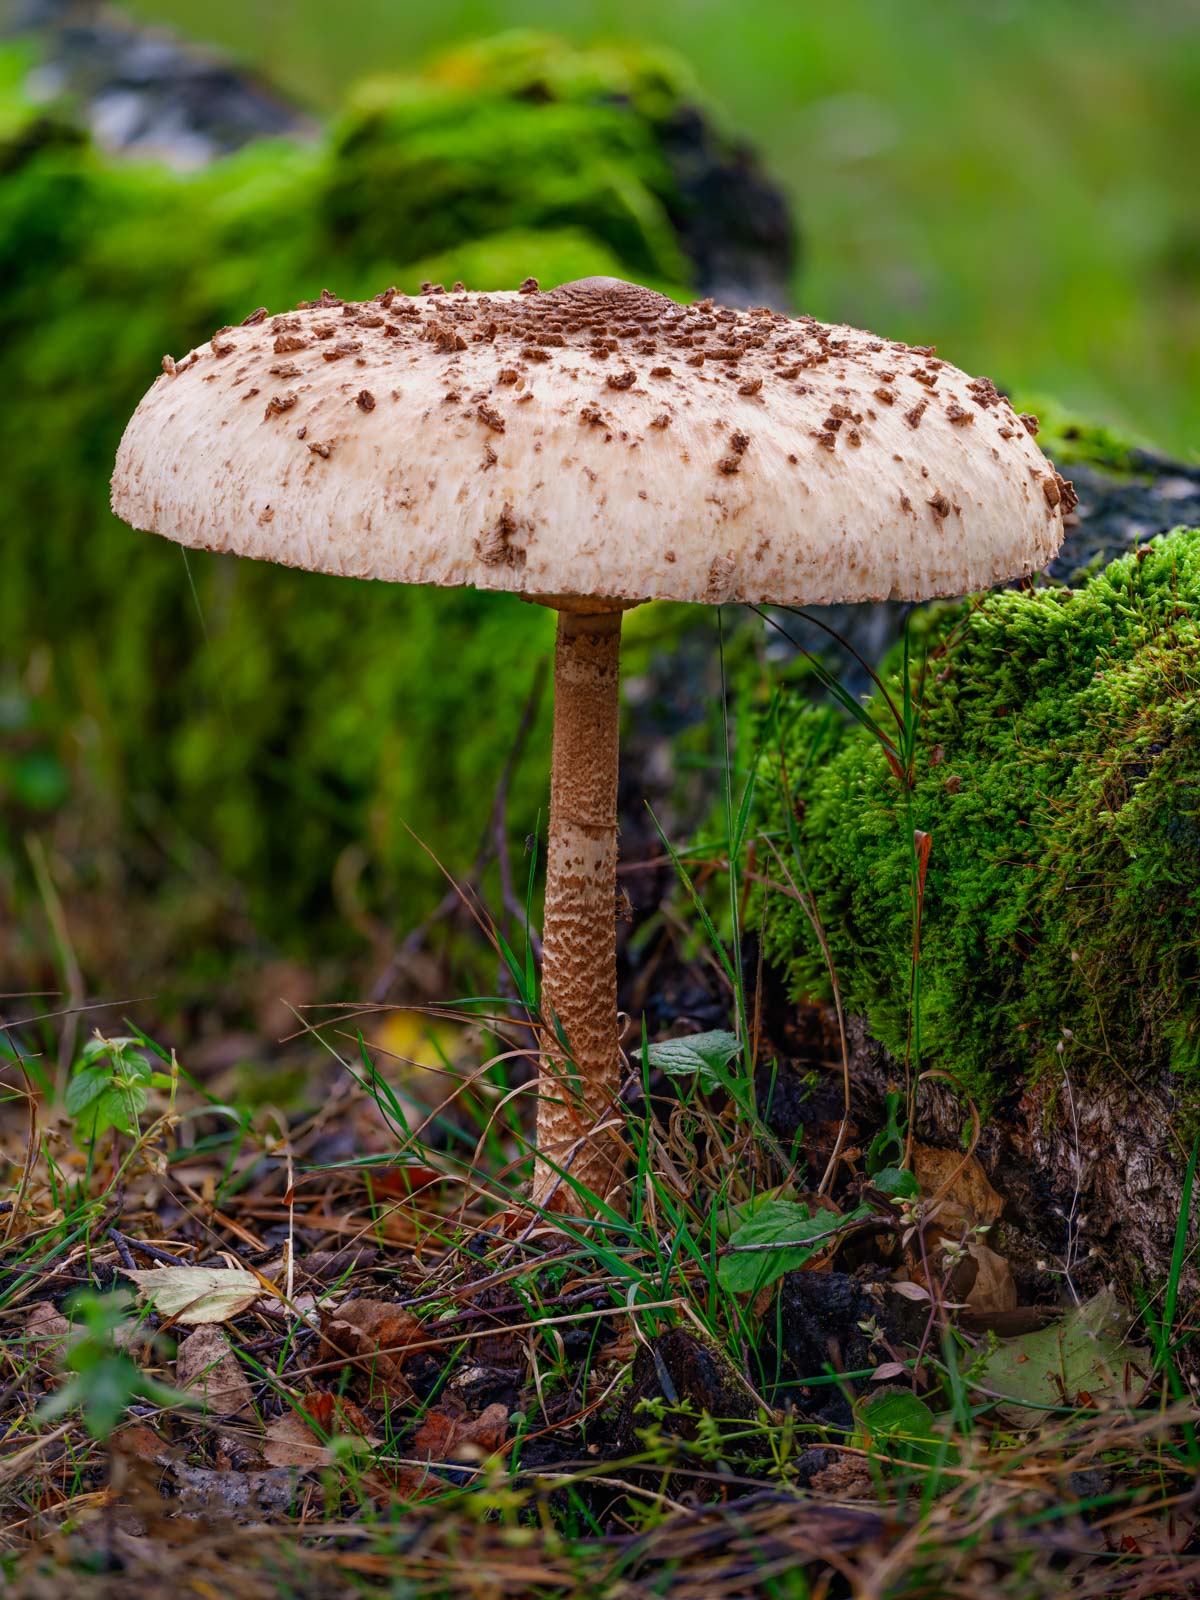 Parasol mushroom (Macrolepiota procera) in the Teutoburg Forest in autumn (Germany).